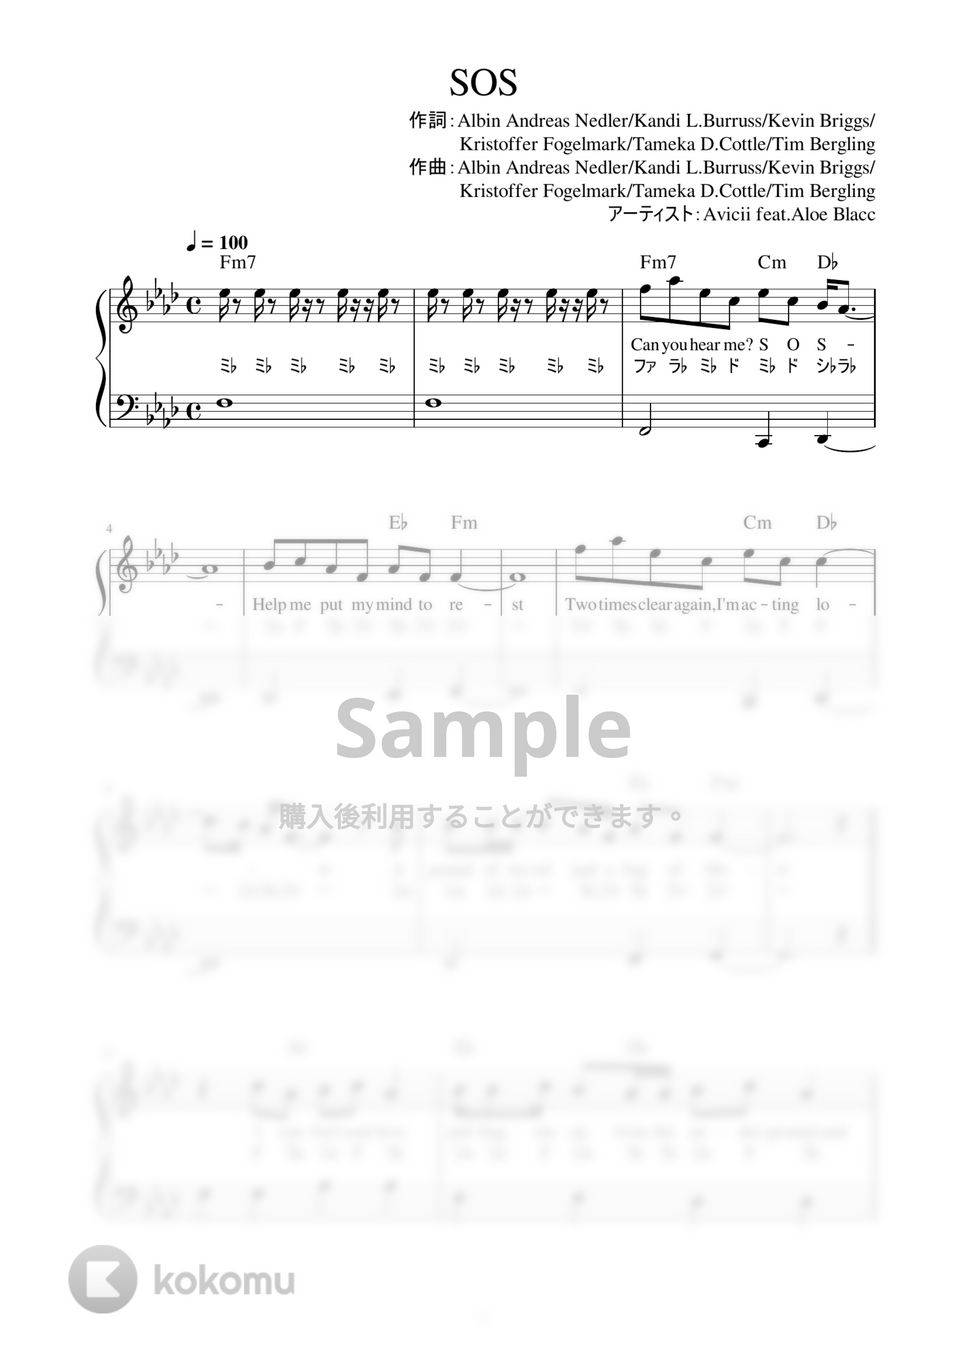 Avicii feat.Aloe Blacc - SOS (かんたん / 歌詞付き / ドレミ付き / 初心者) by piano.tokyo